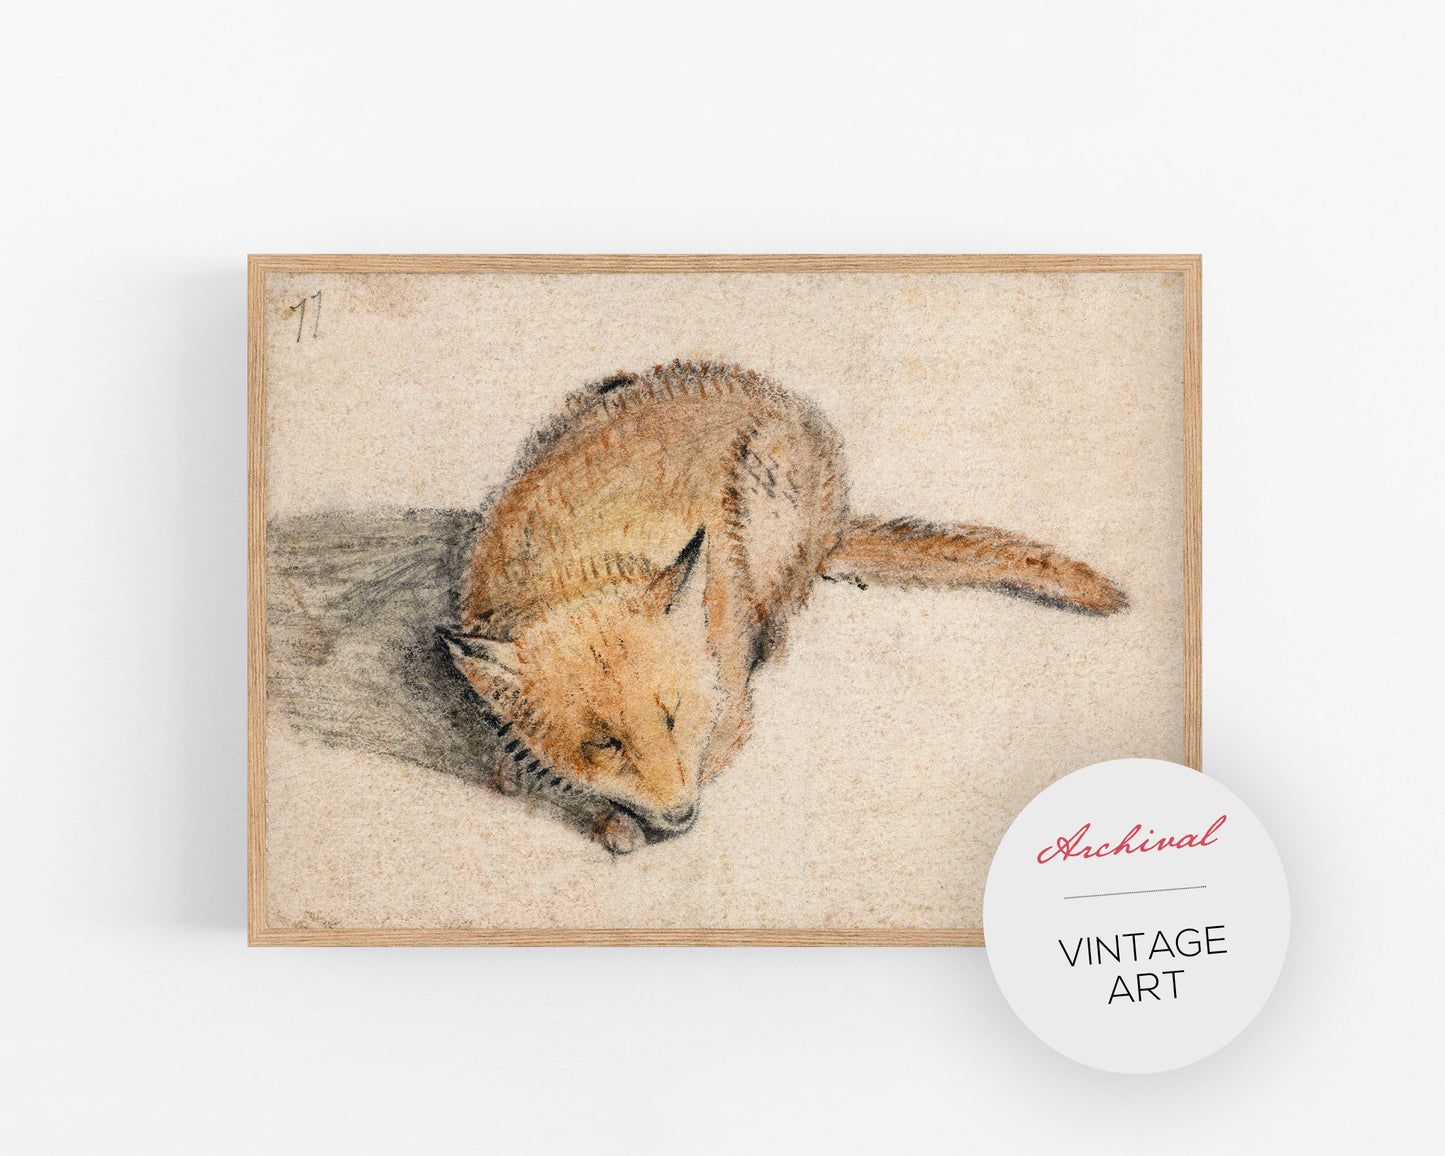 Vintage fox fine art print | Sleeping fox | Animal art | 17th century illustration |  Modern vintage décor | Ready to frame & gift